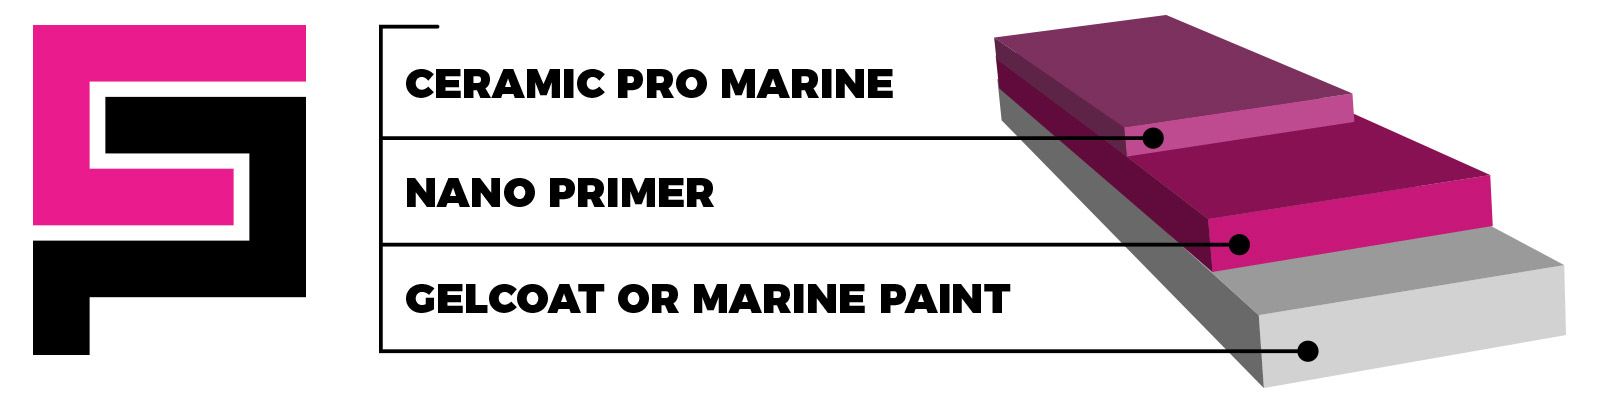 Ceramic Pro Marine System